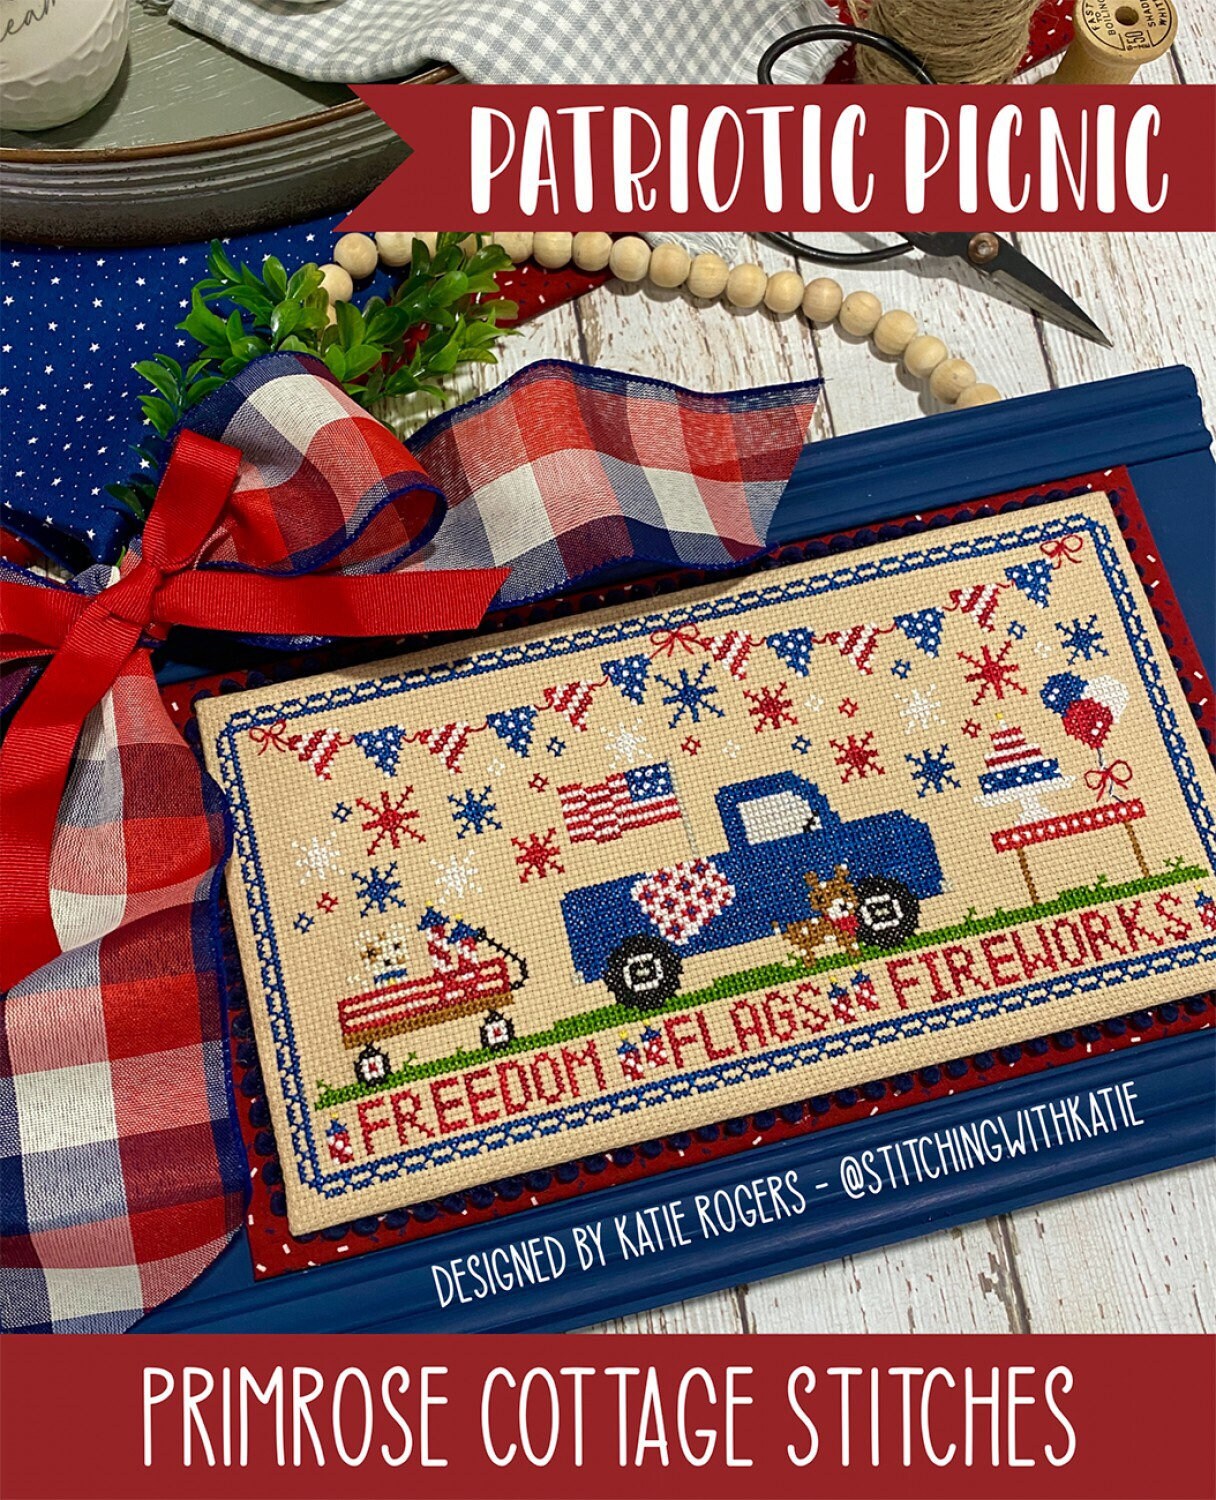 Patriotic Picnic Cross Stitch Pattern - Primrose Cottage Stitches - Lindsey Weight - Katie Rogers - Stitching With Katie